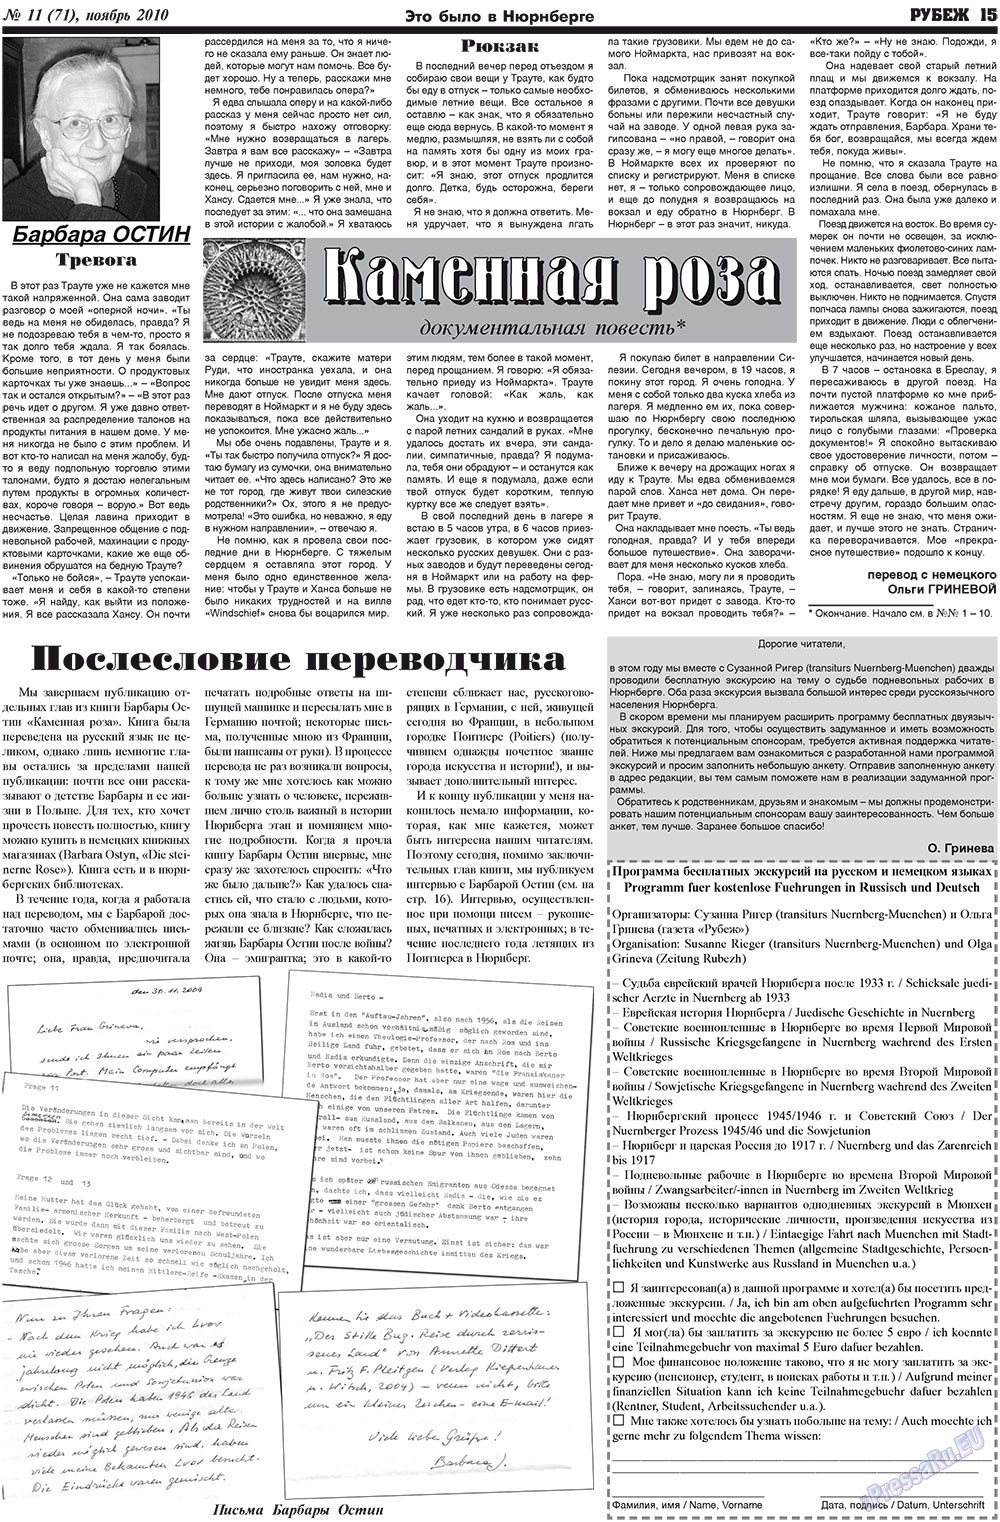 Рубеж, газета. 2010 №11 стр.15